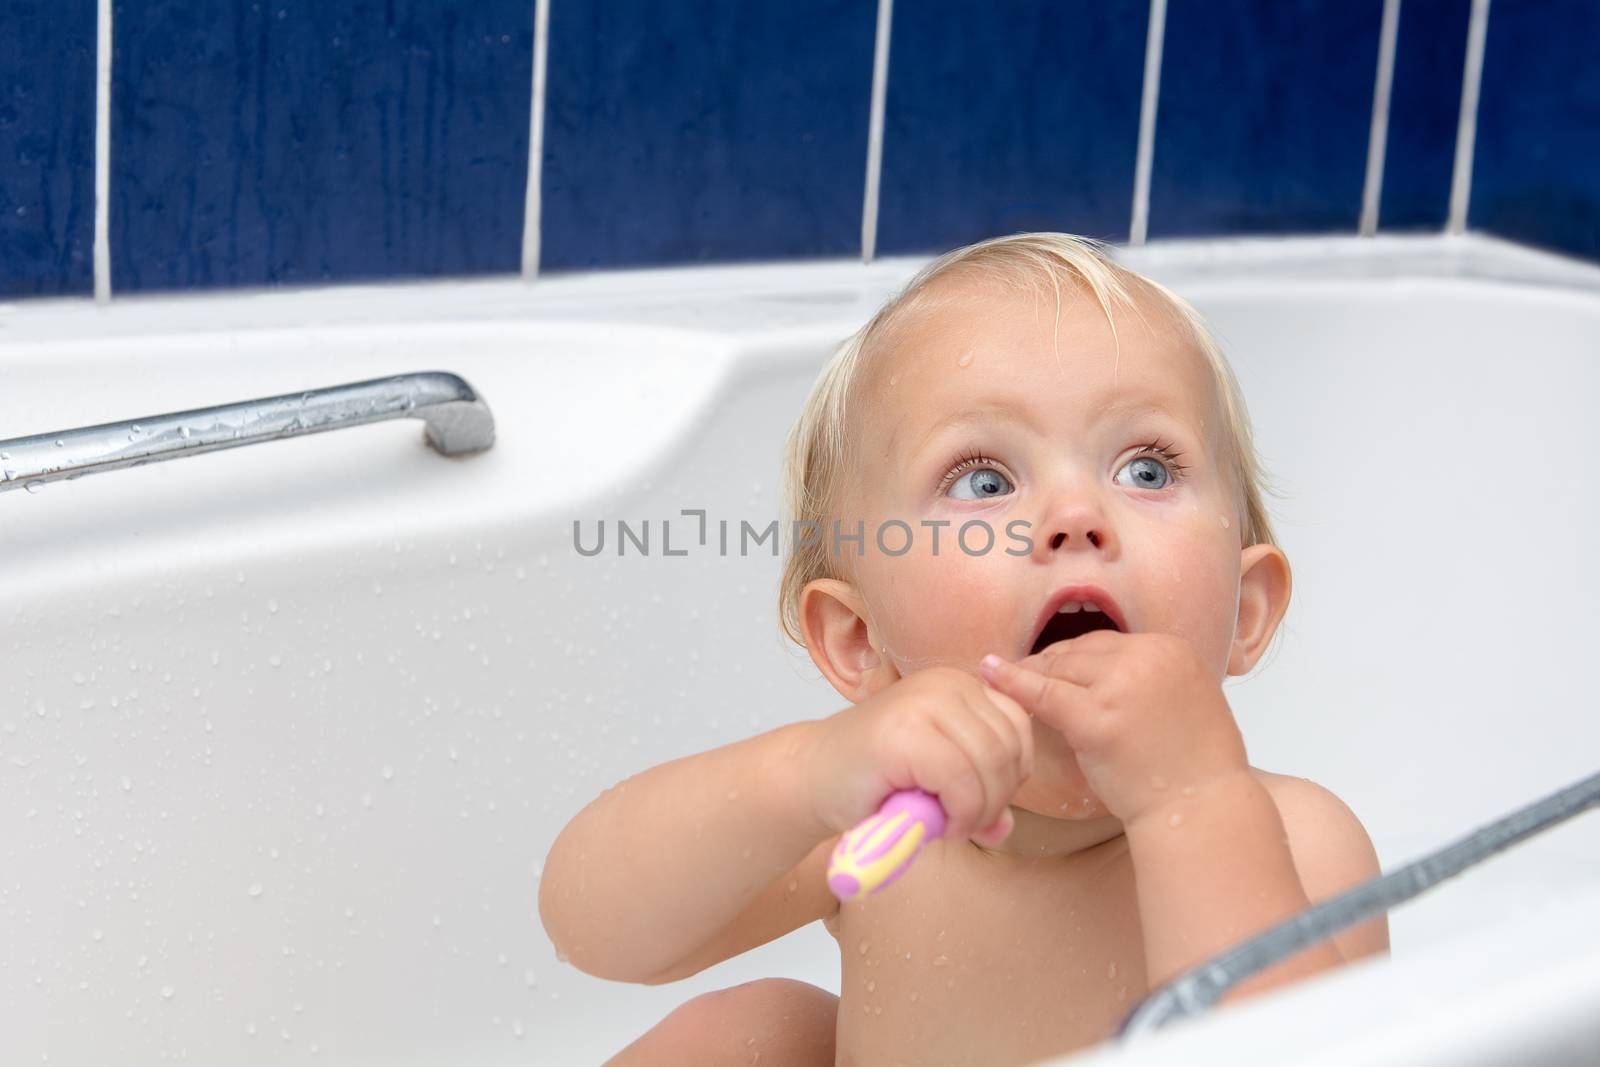 Little girl brusing teeth by kamsta